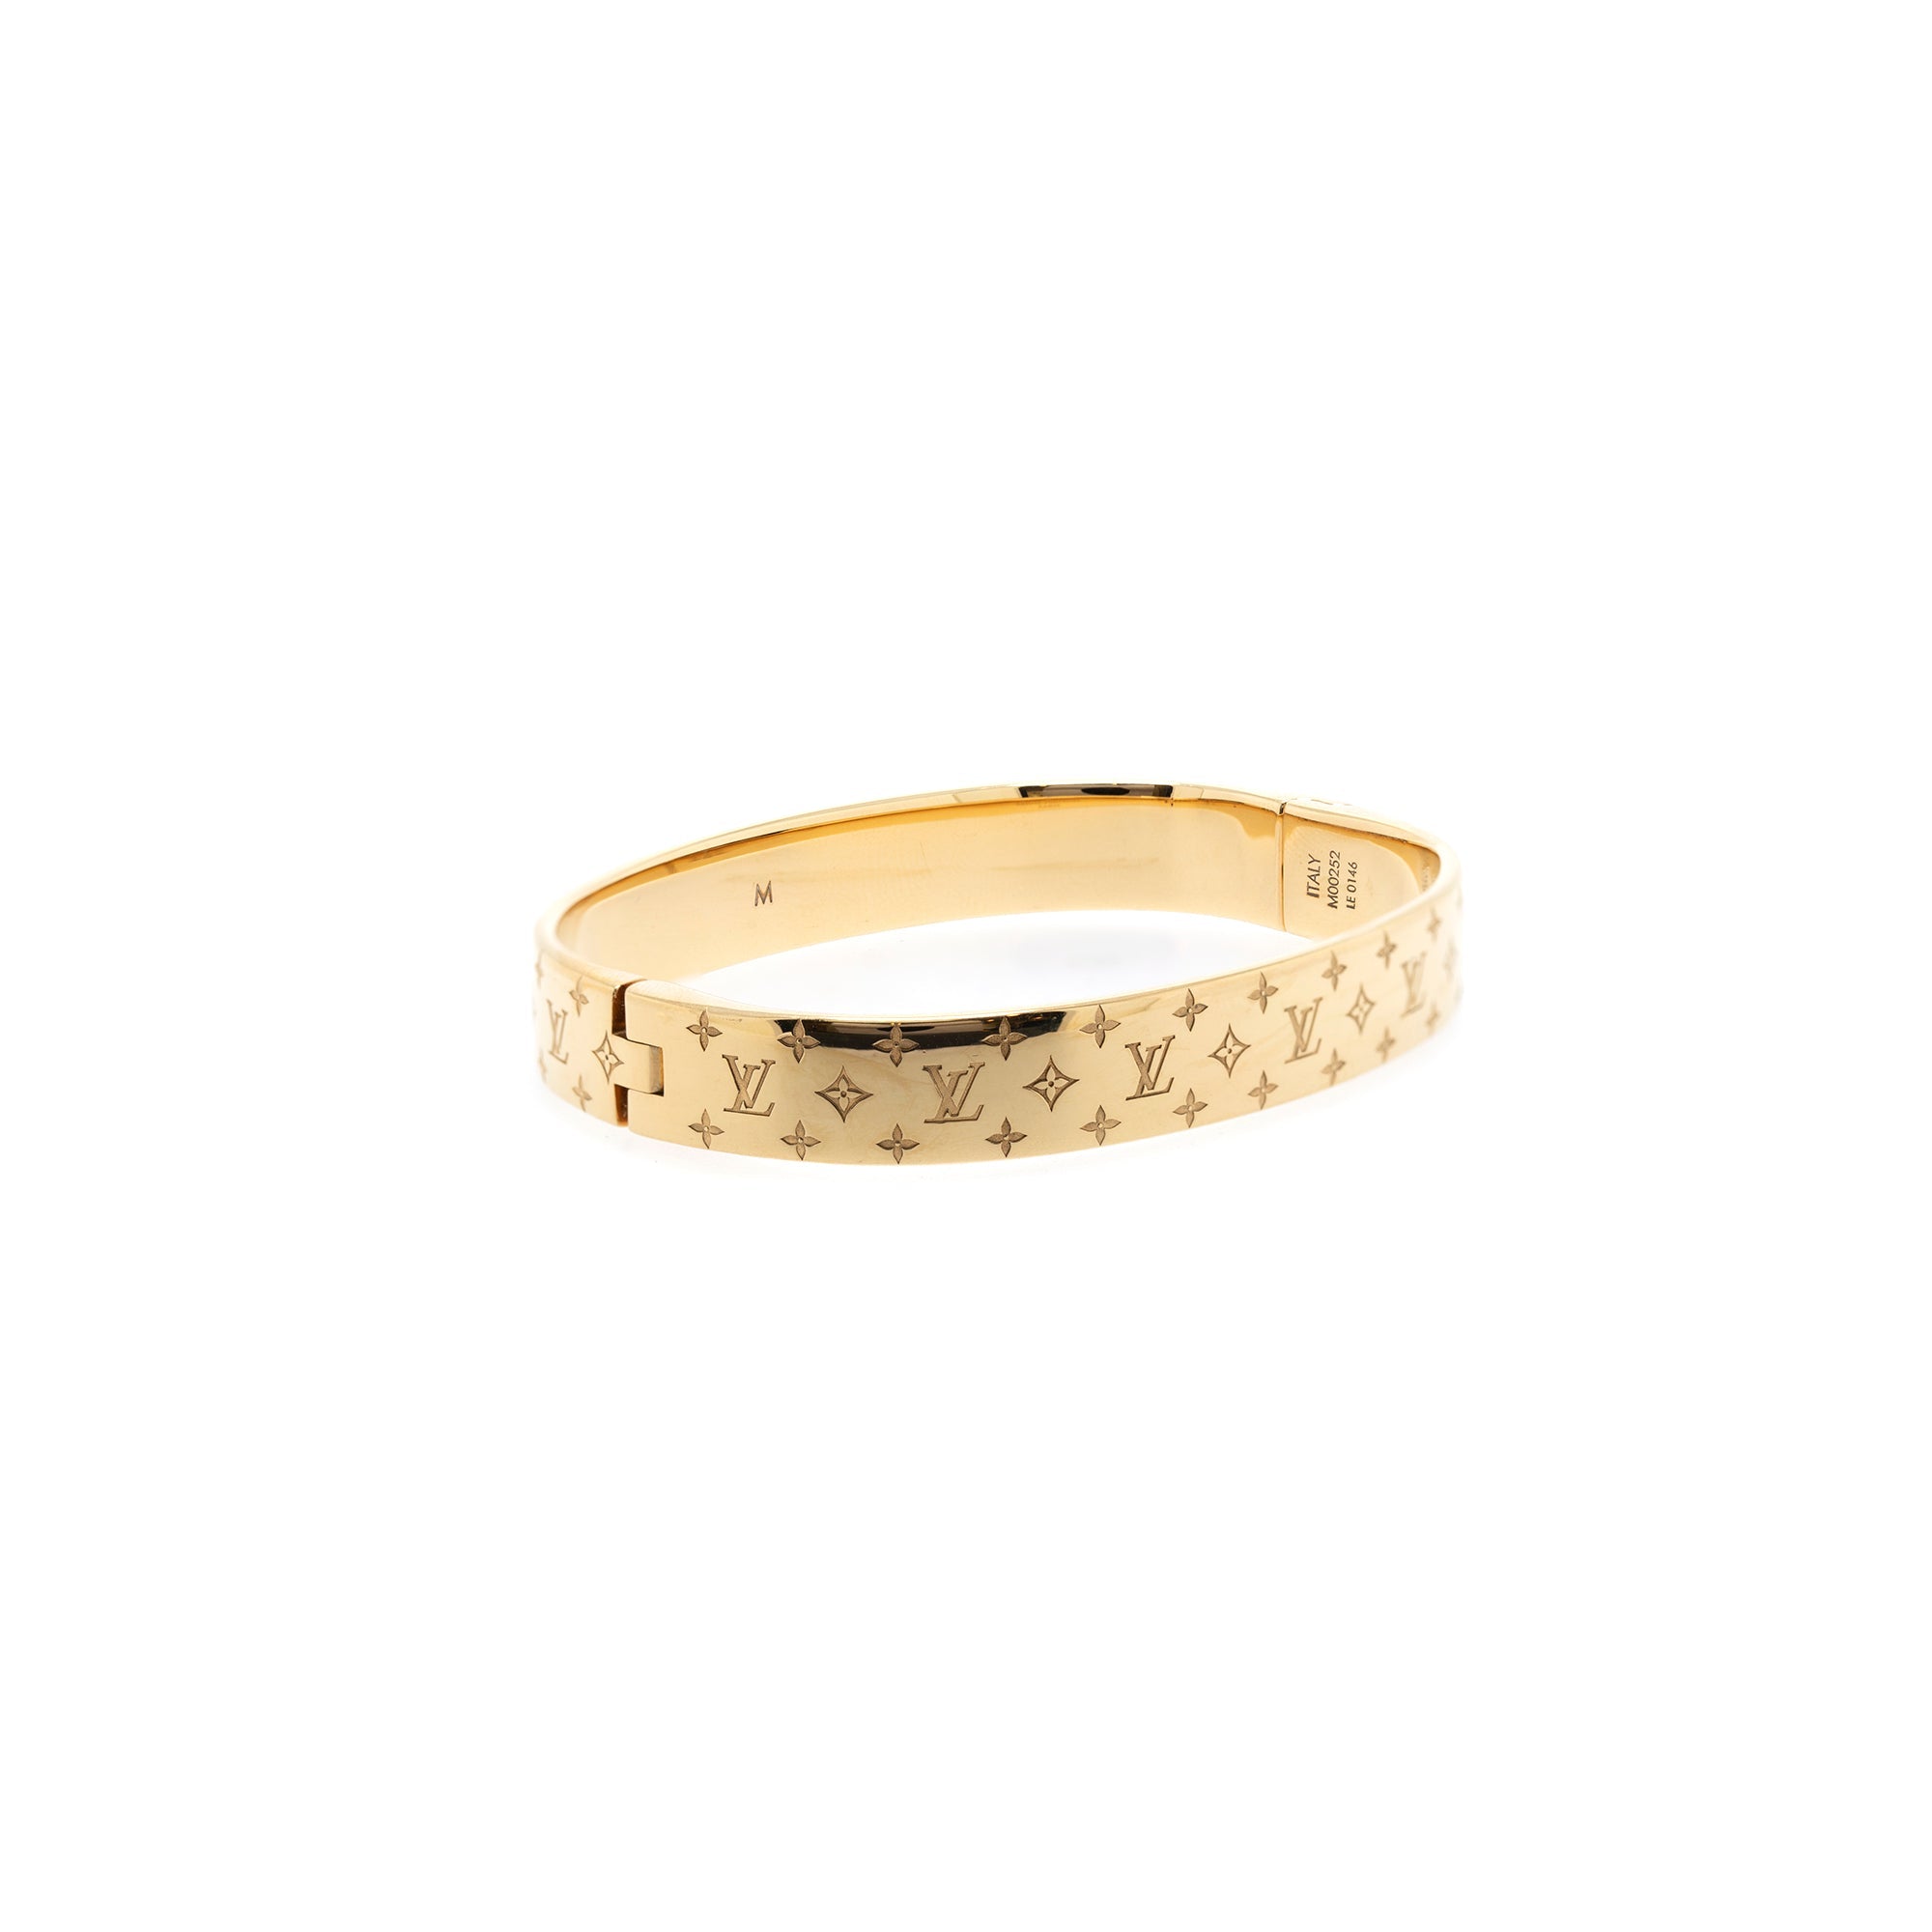 Louis Vuitton 'nanogram Cuff' Bracelet